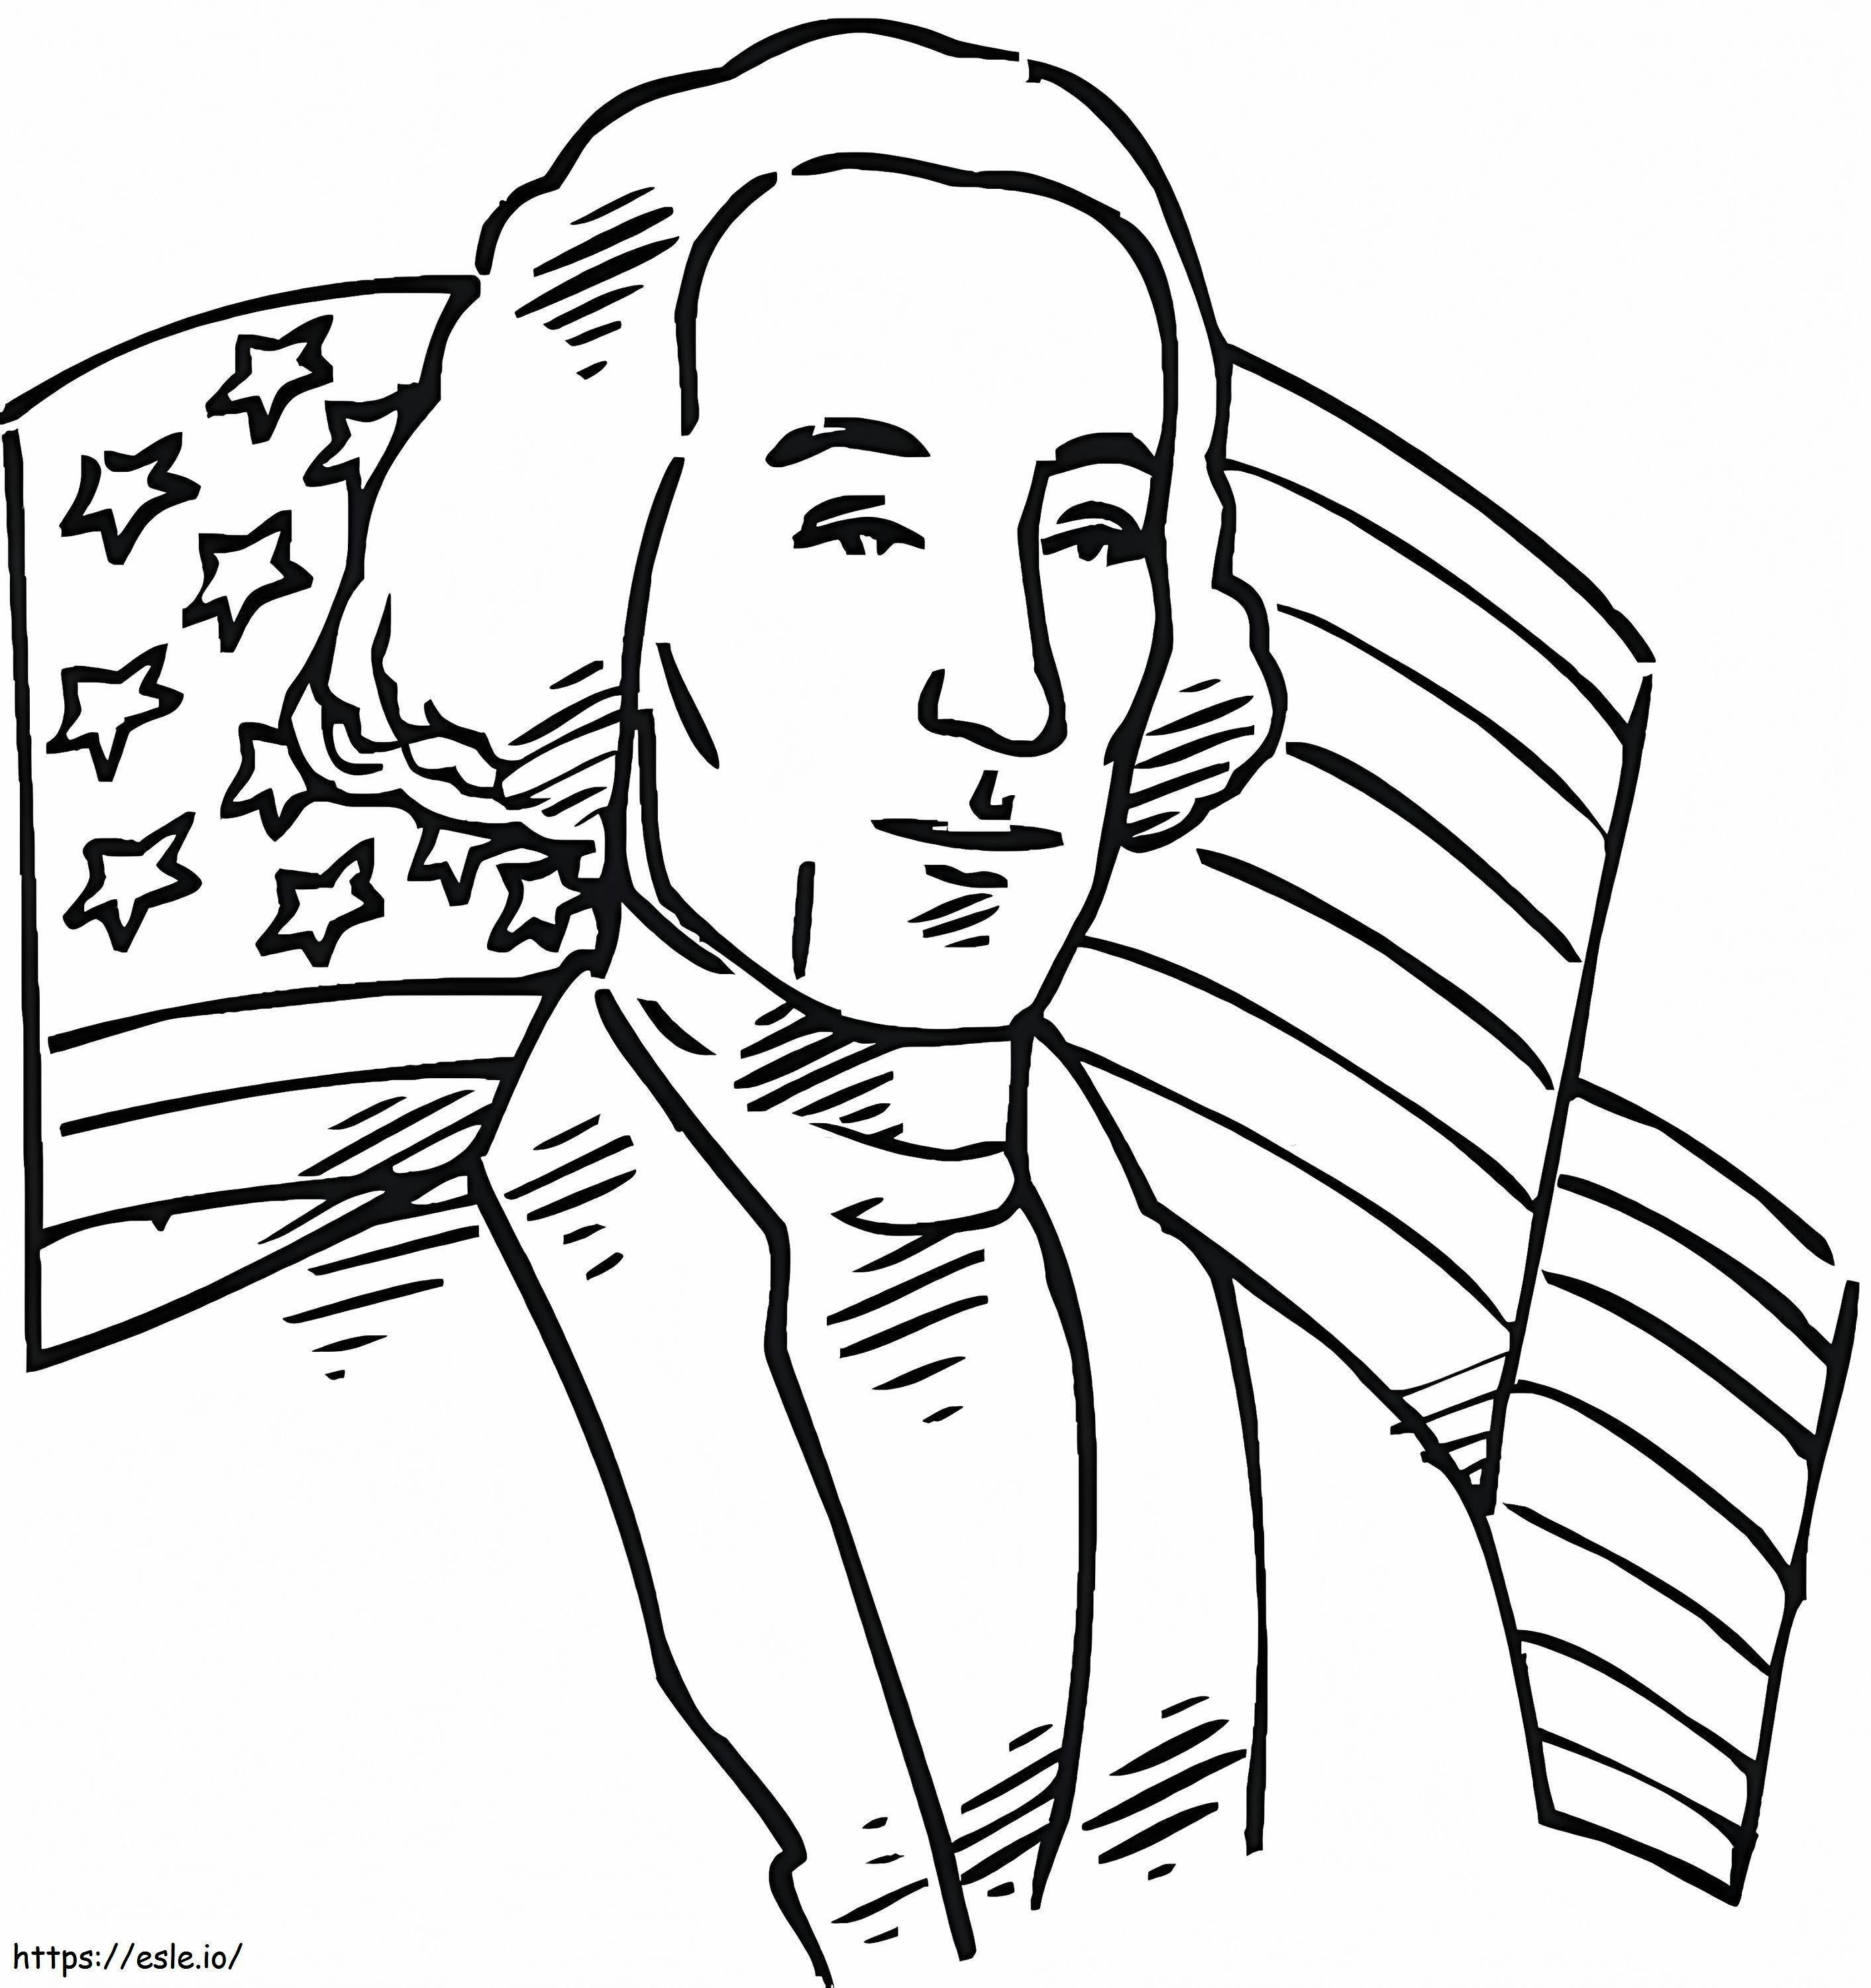 Primer presidente de Estados Unidos, George Washington para colorear